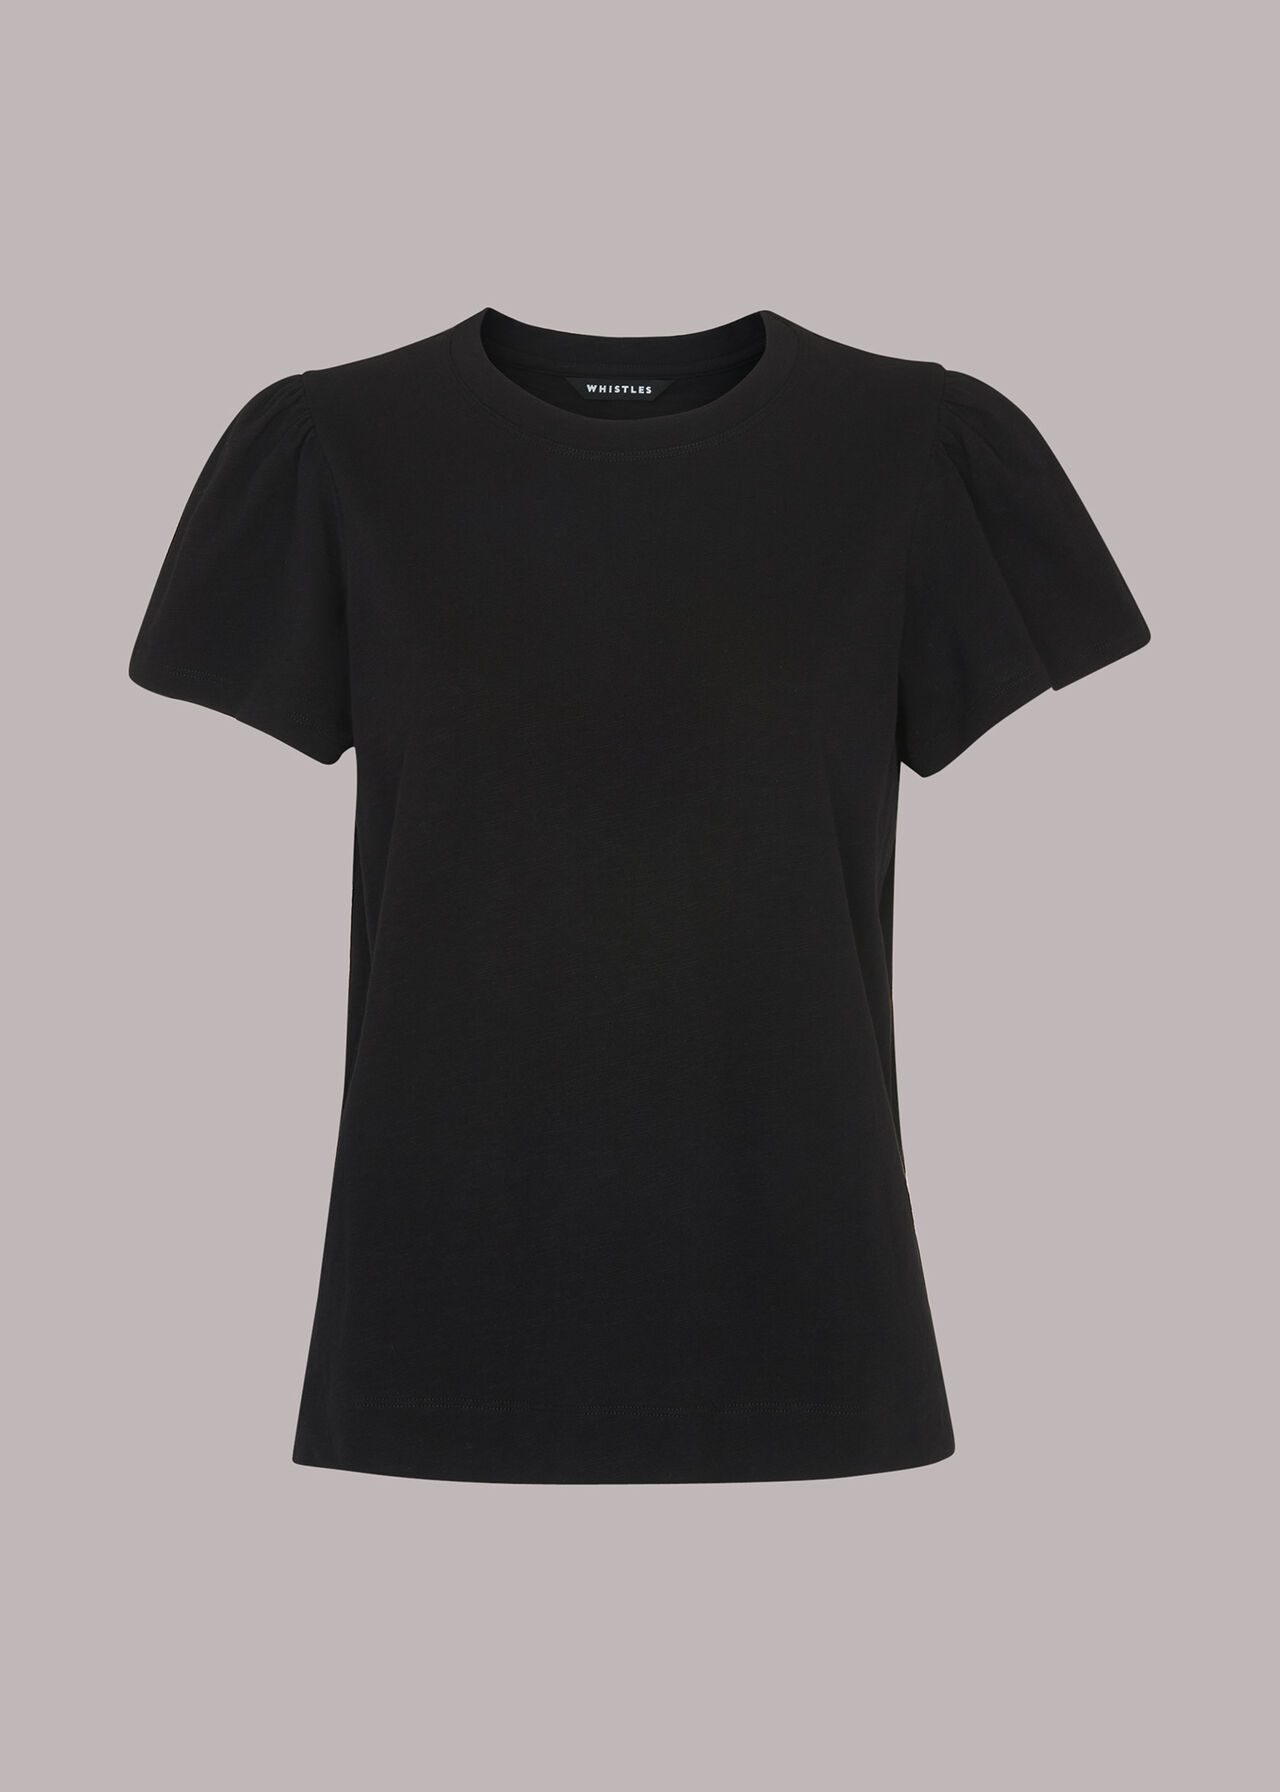 Black Cotton Frill Sleeve T Shirt | WHISTLES